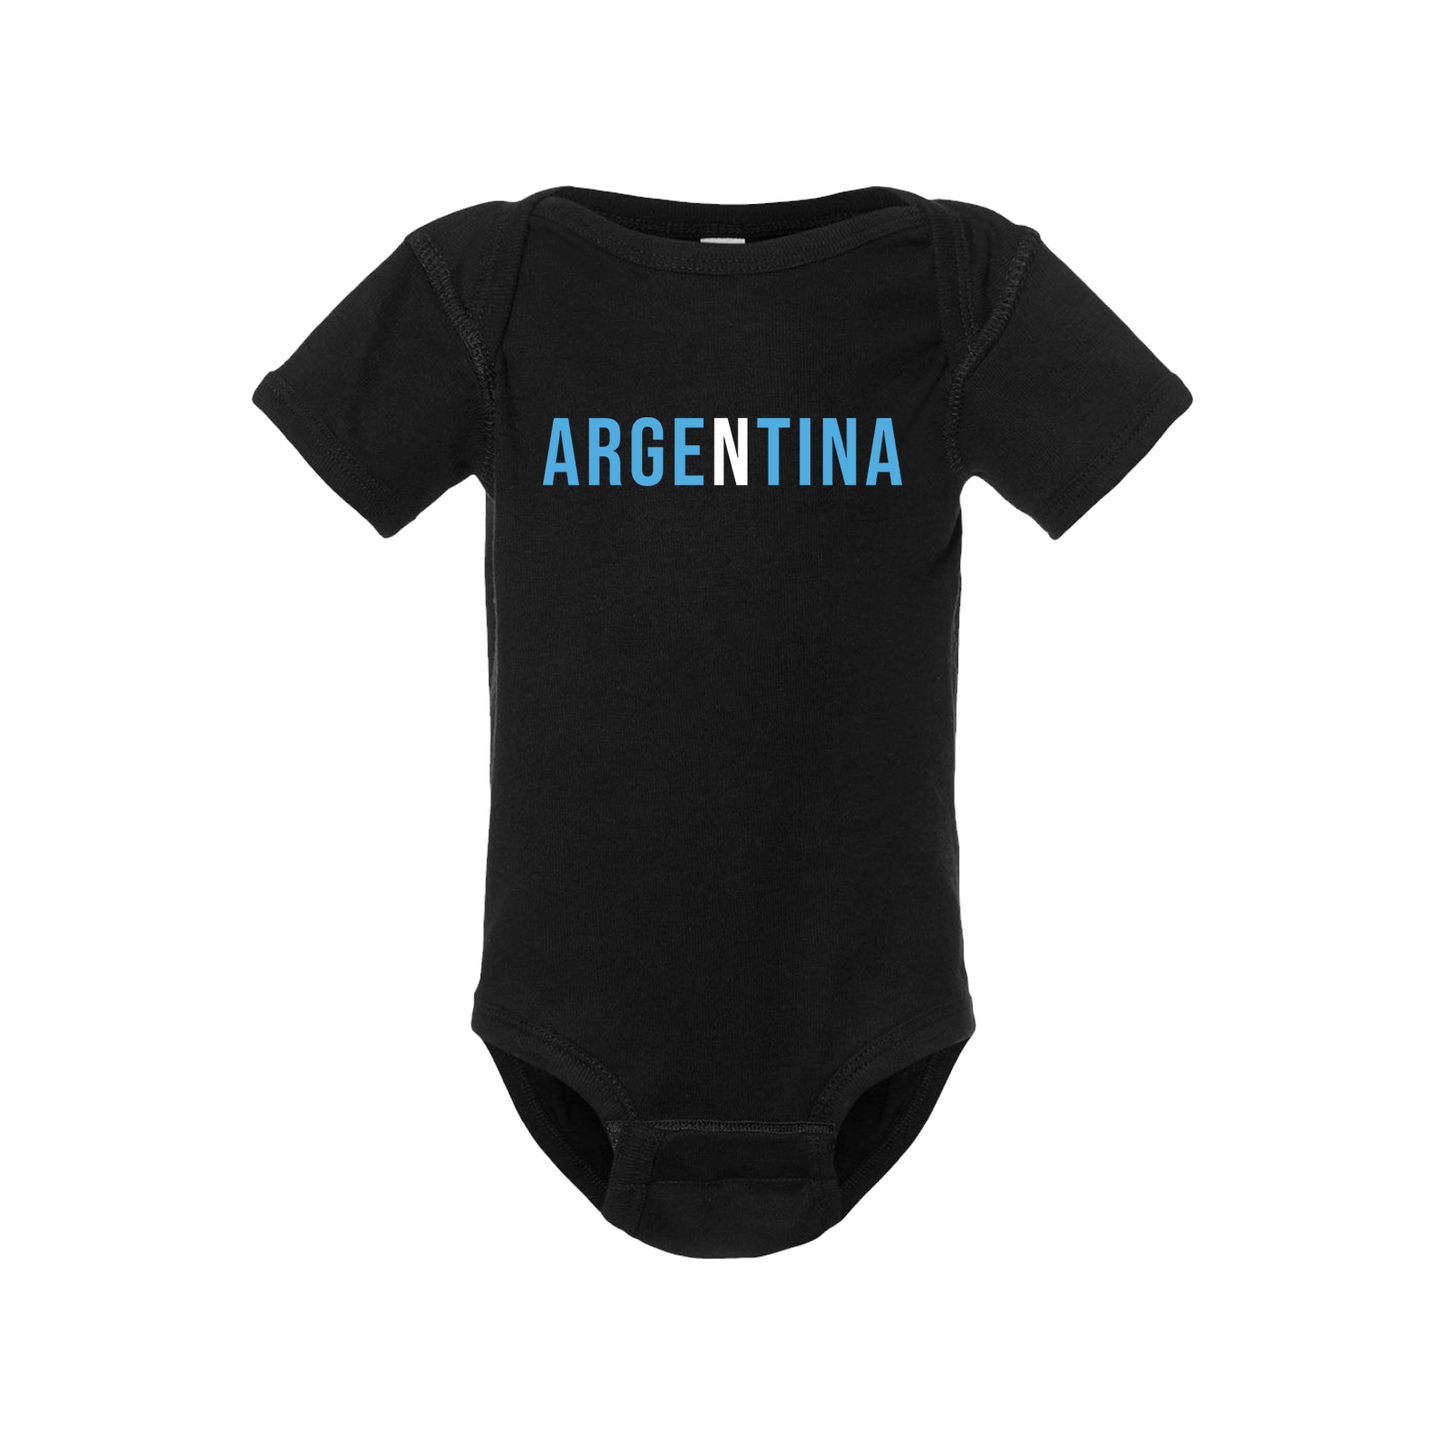 Argentina Short Sleeve Onesie - Babies & Toddlers